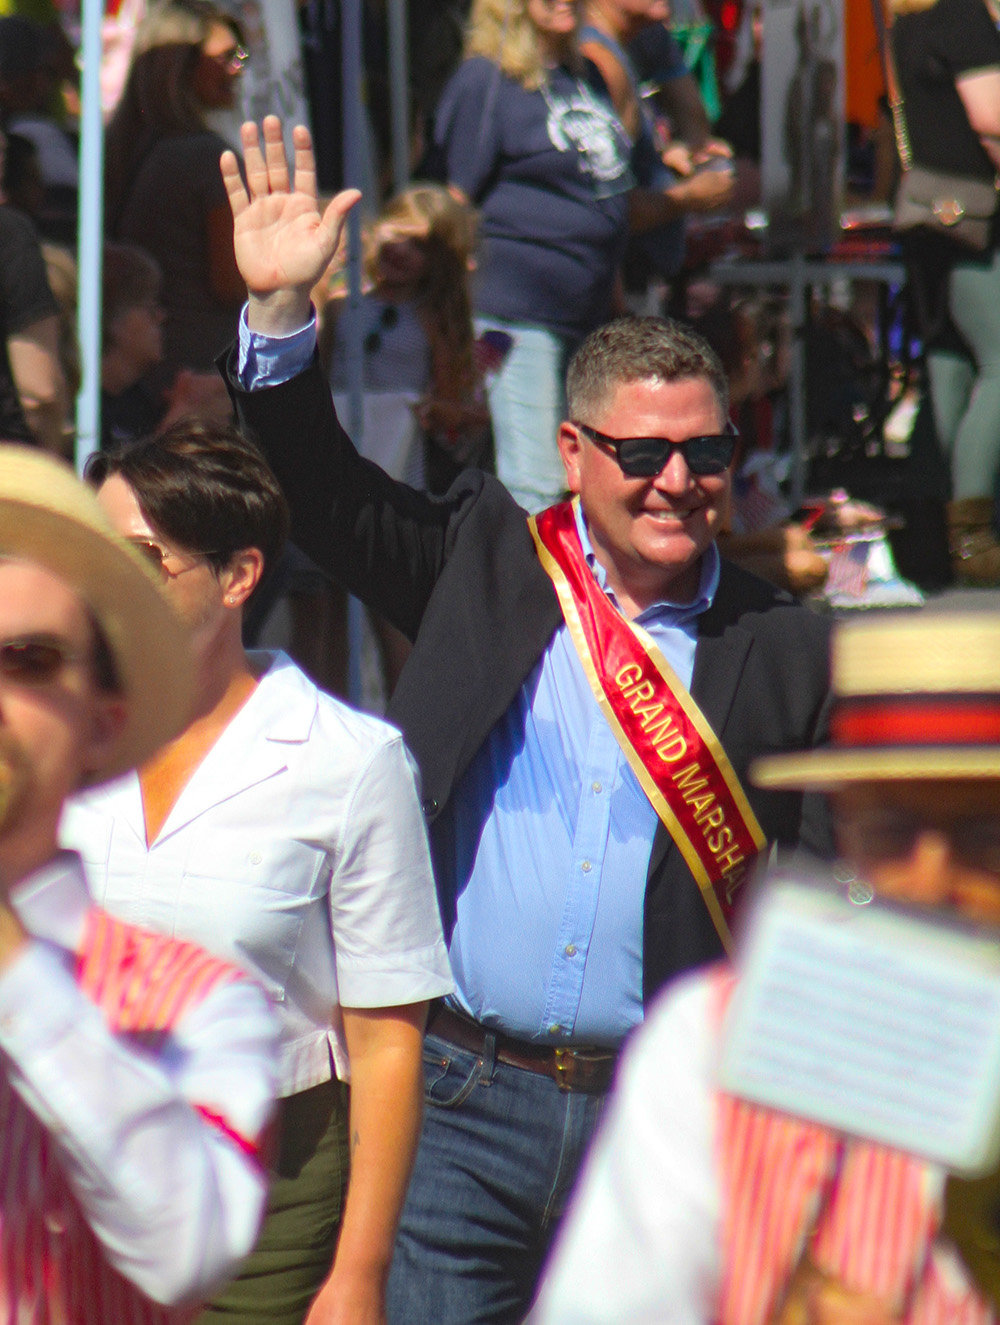 Grand Marshal Marc Devitt waves to the crowd.